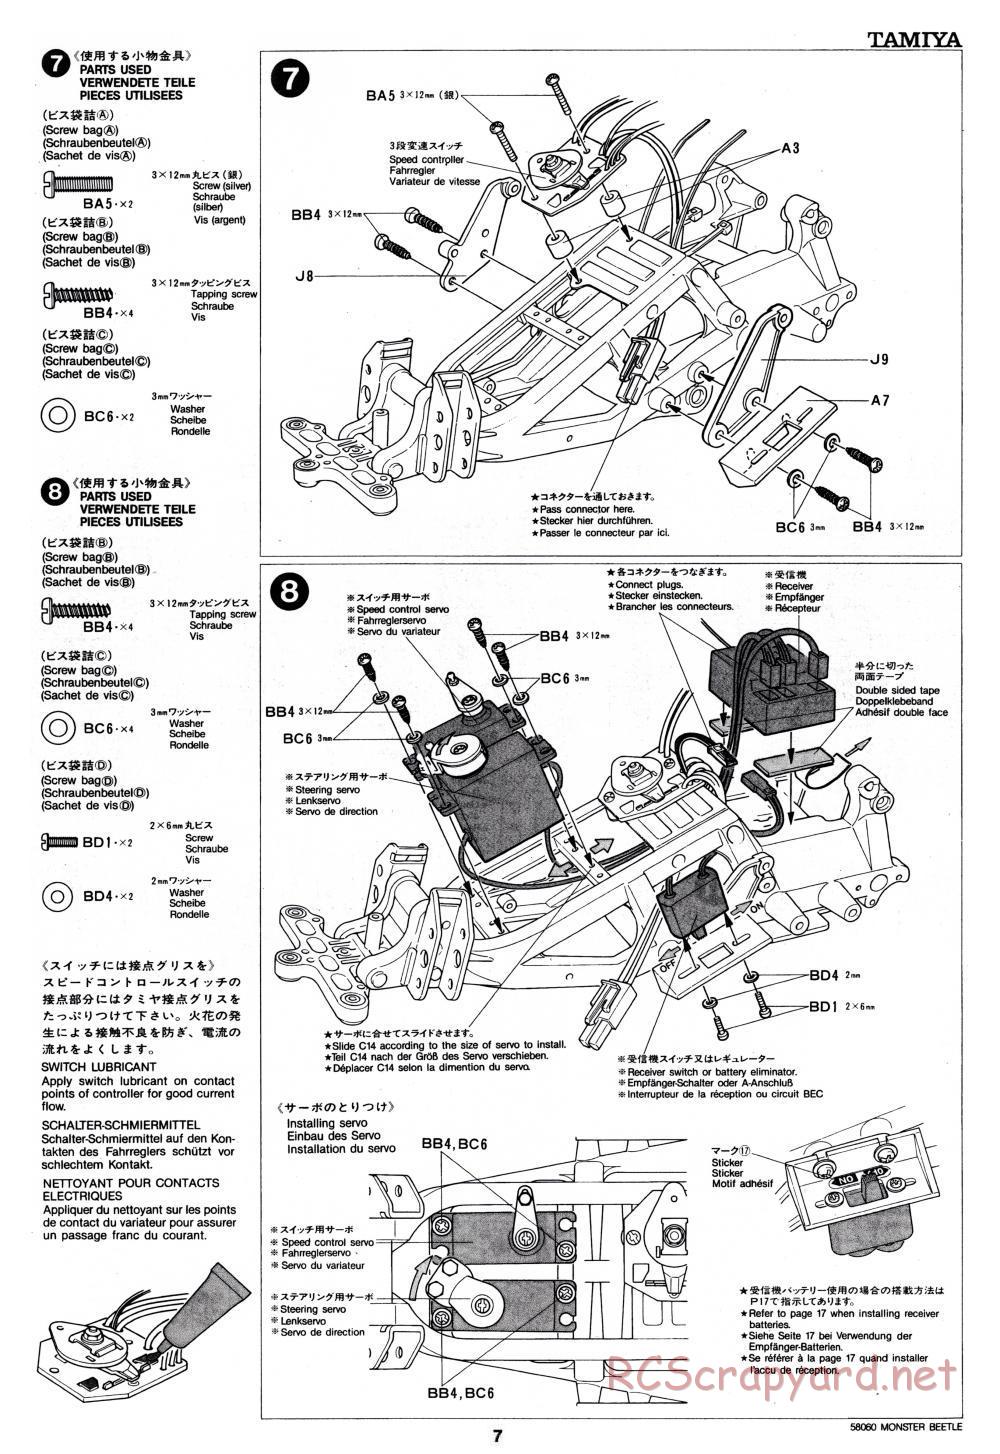 Tamiya - Monster Beetle - 58060 - Manual - Page 7